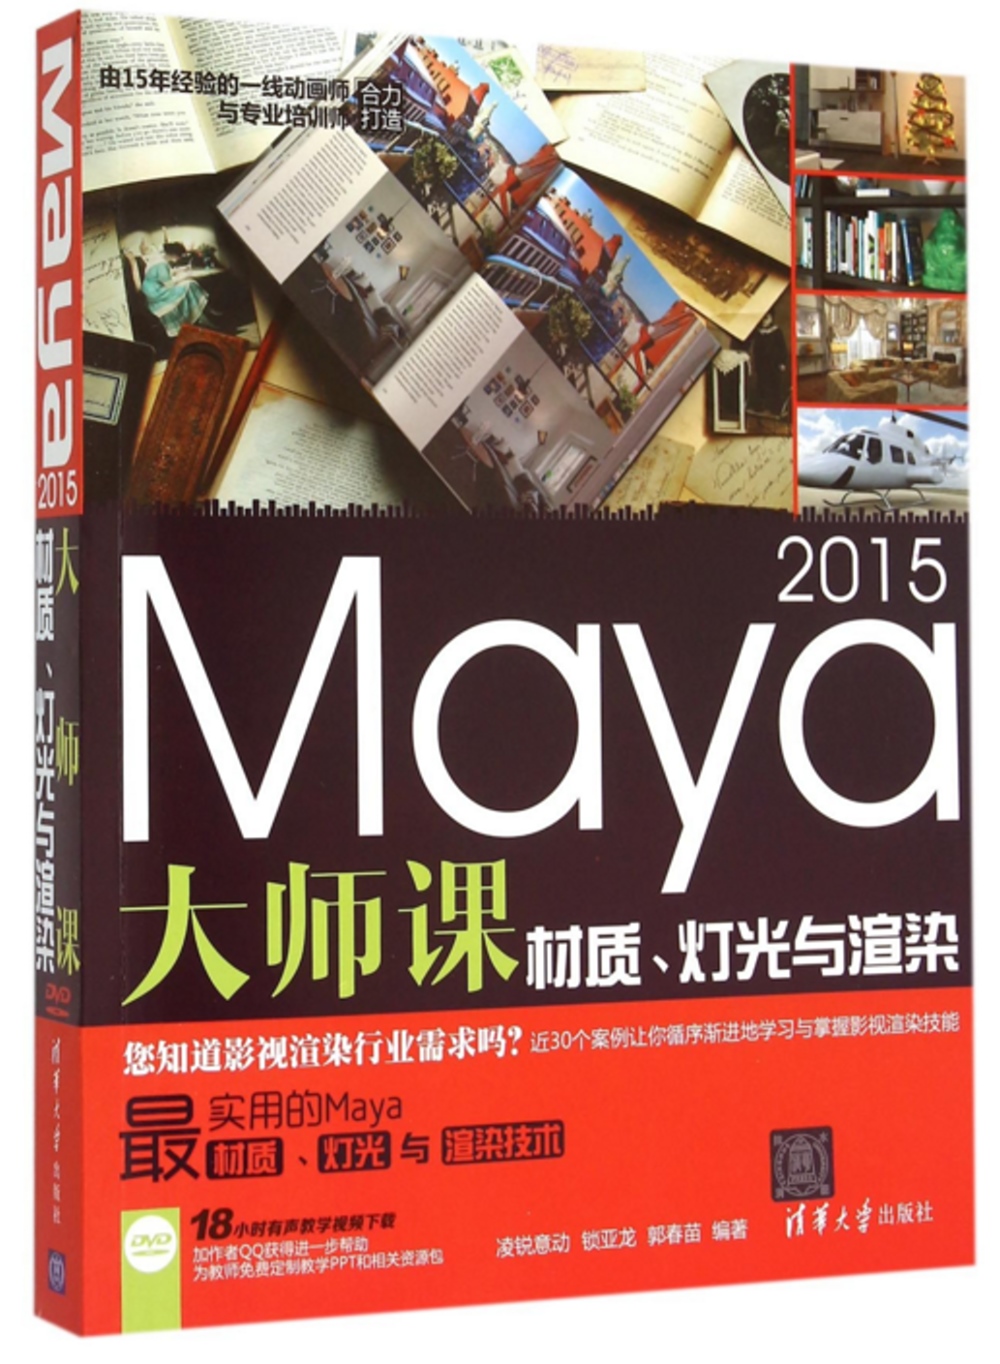 Maya 2015大師課：材質、燈光與渲染